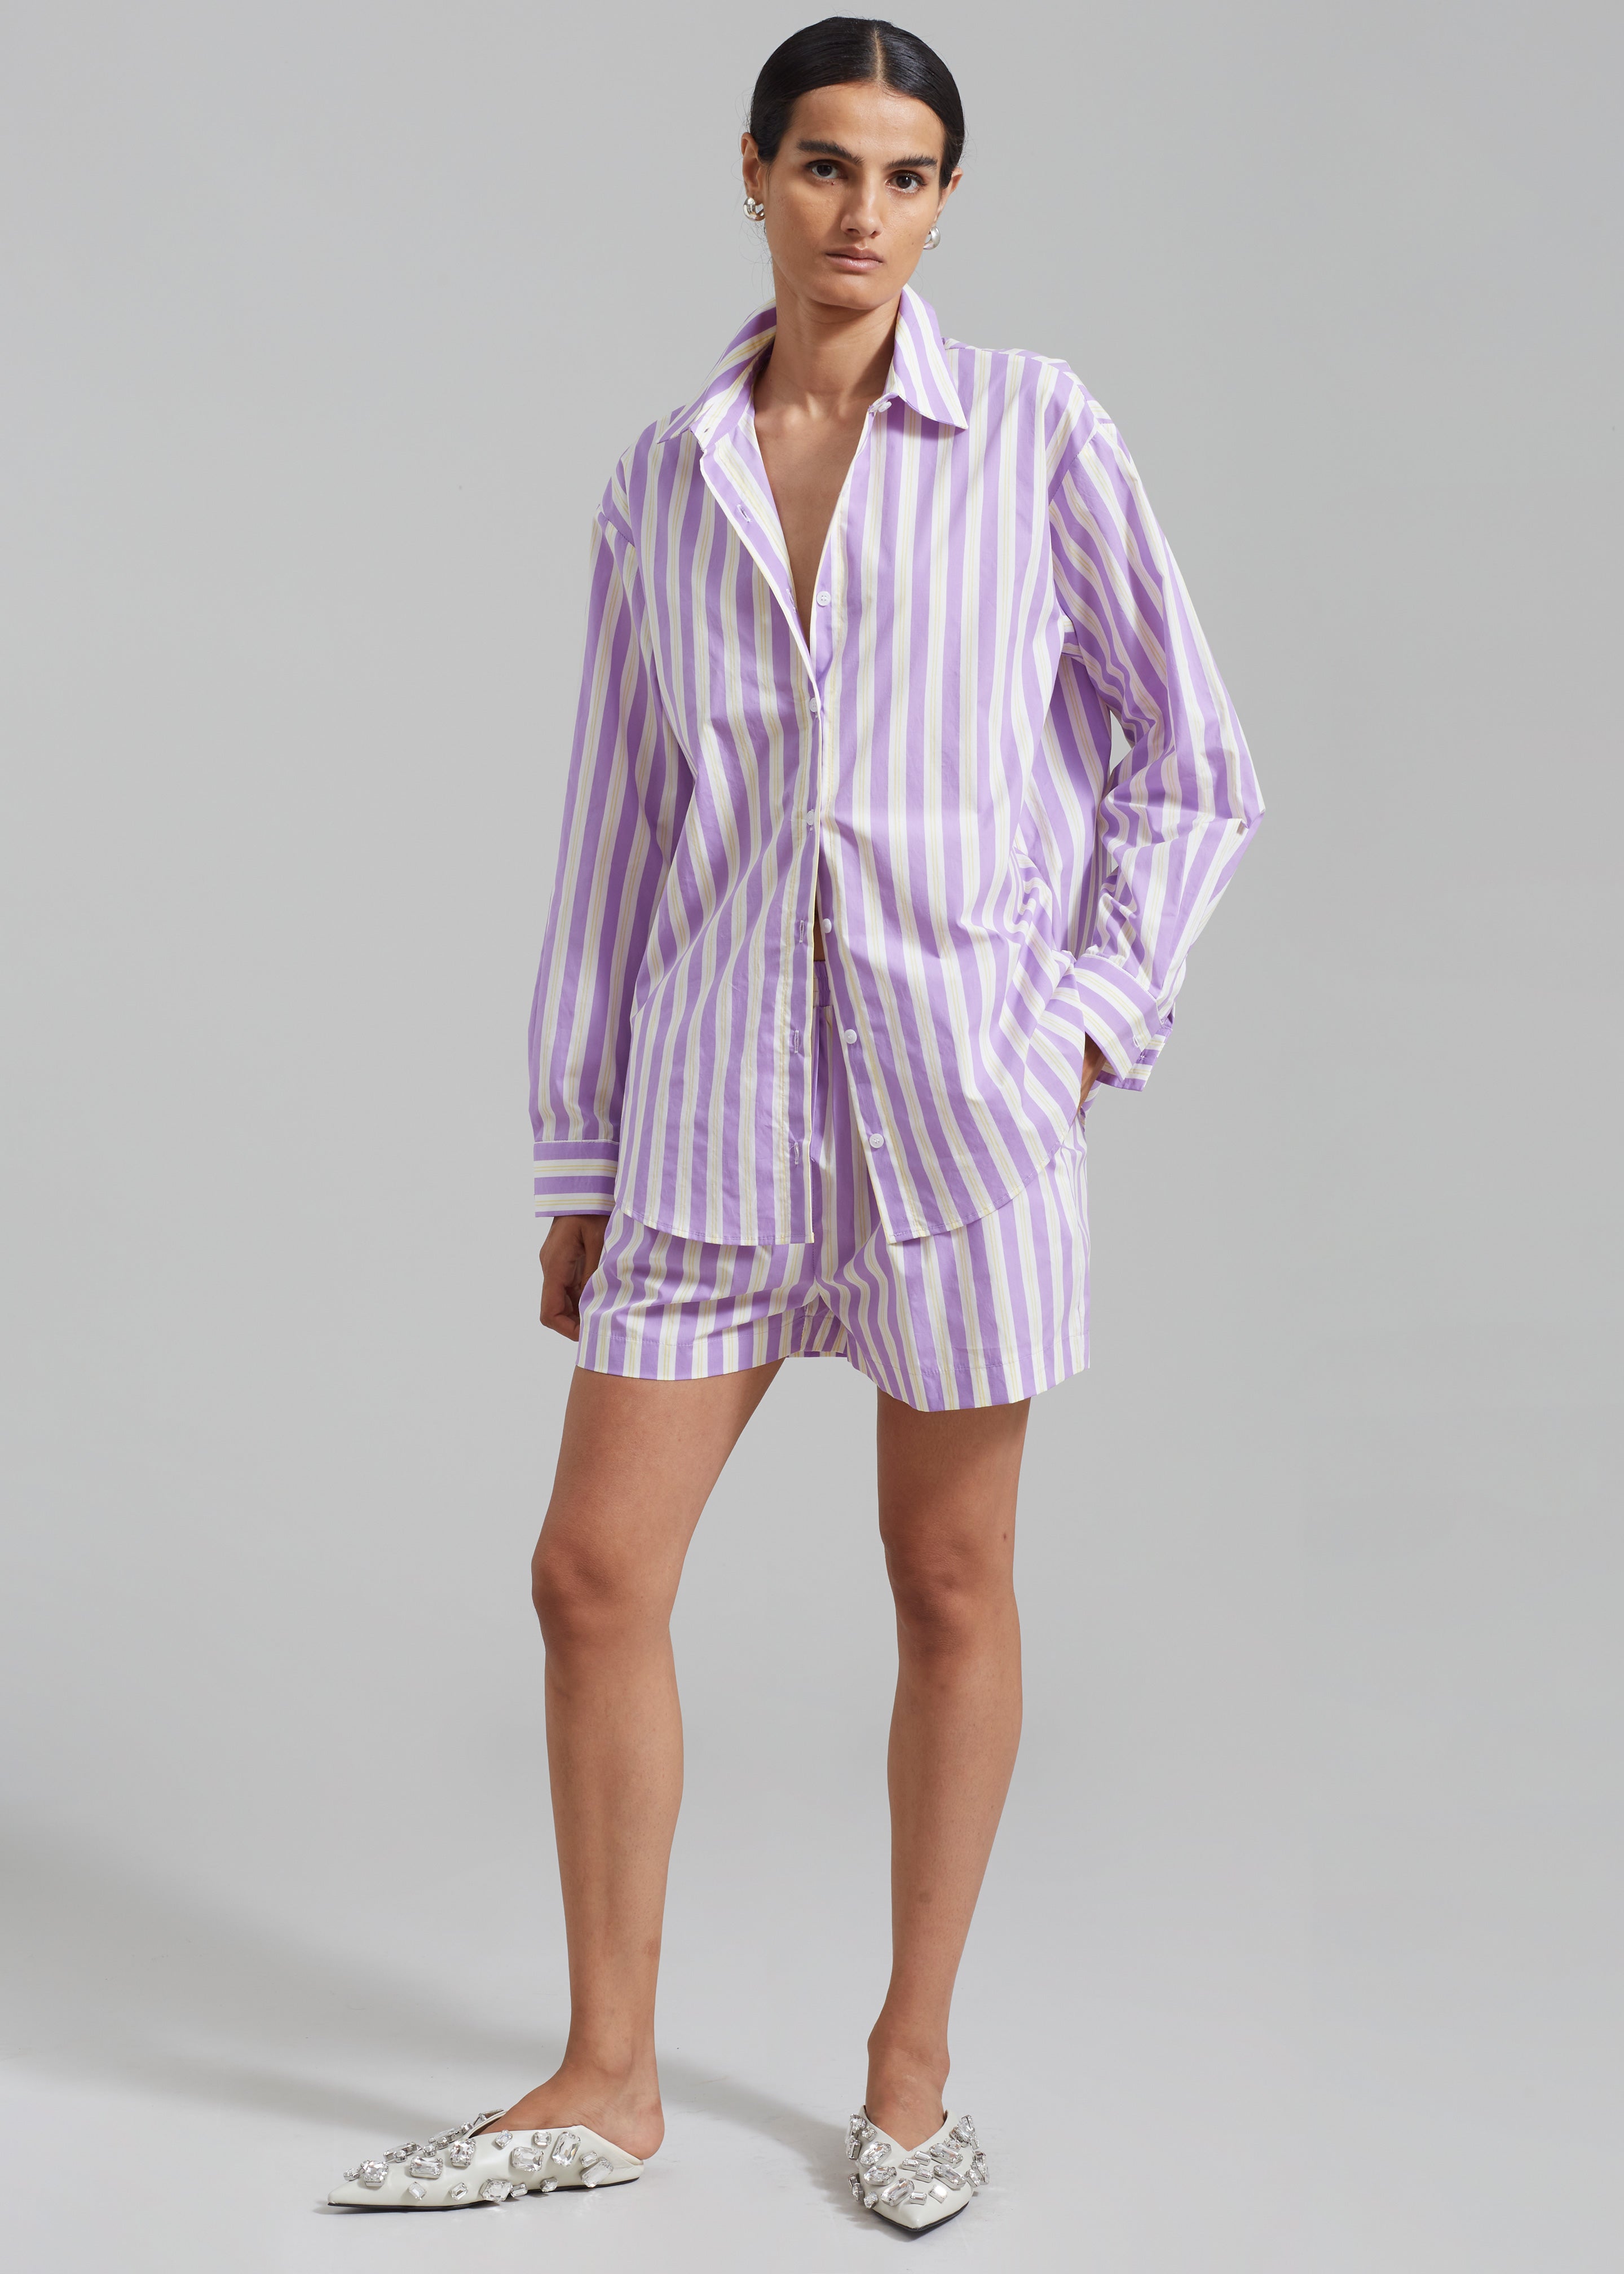 Juno Cotton Shirt - Violet Stripe - 3